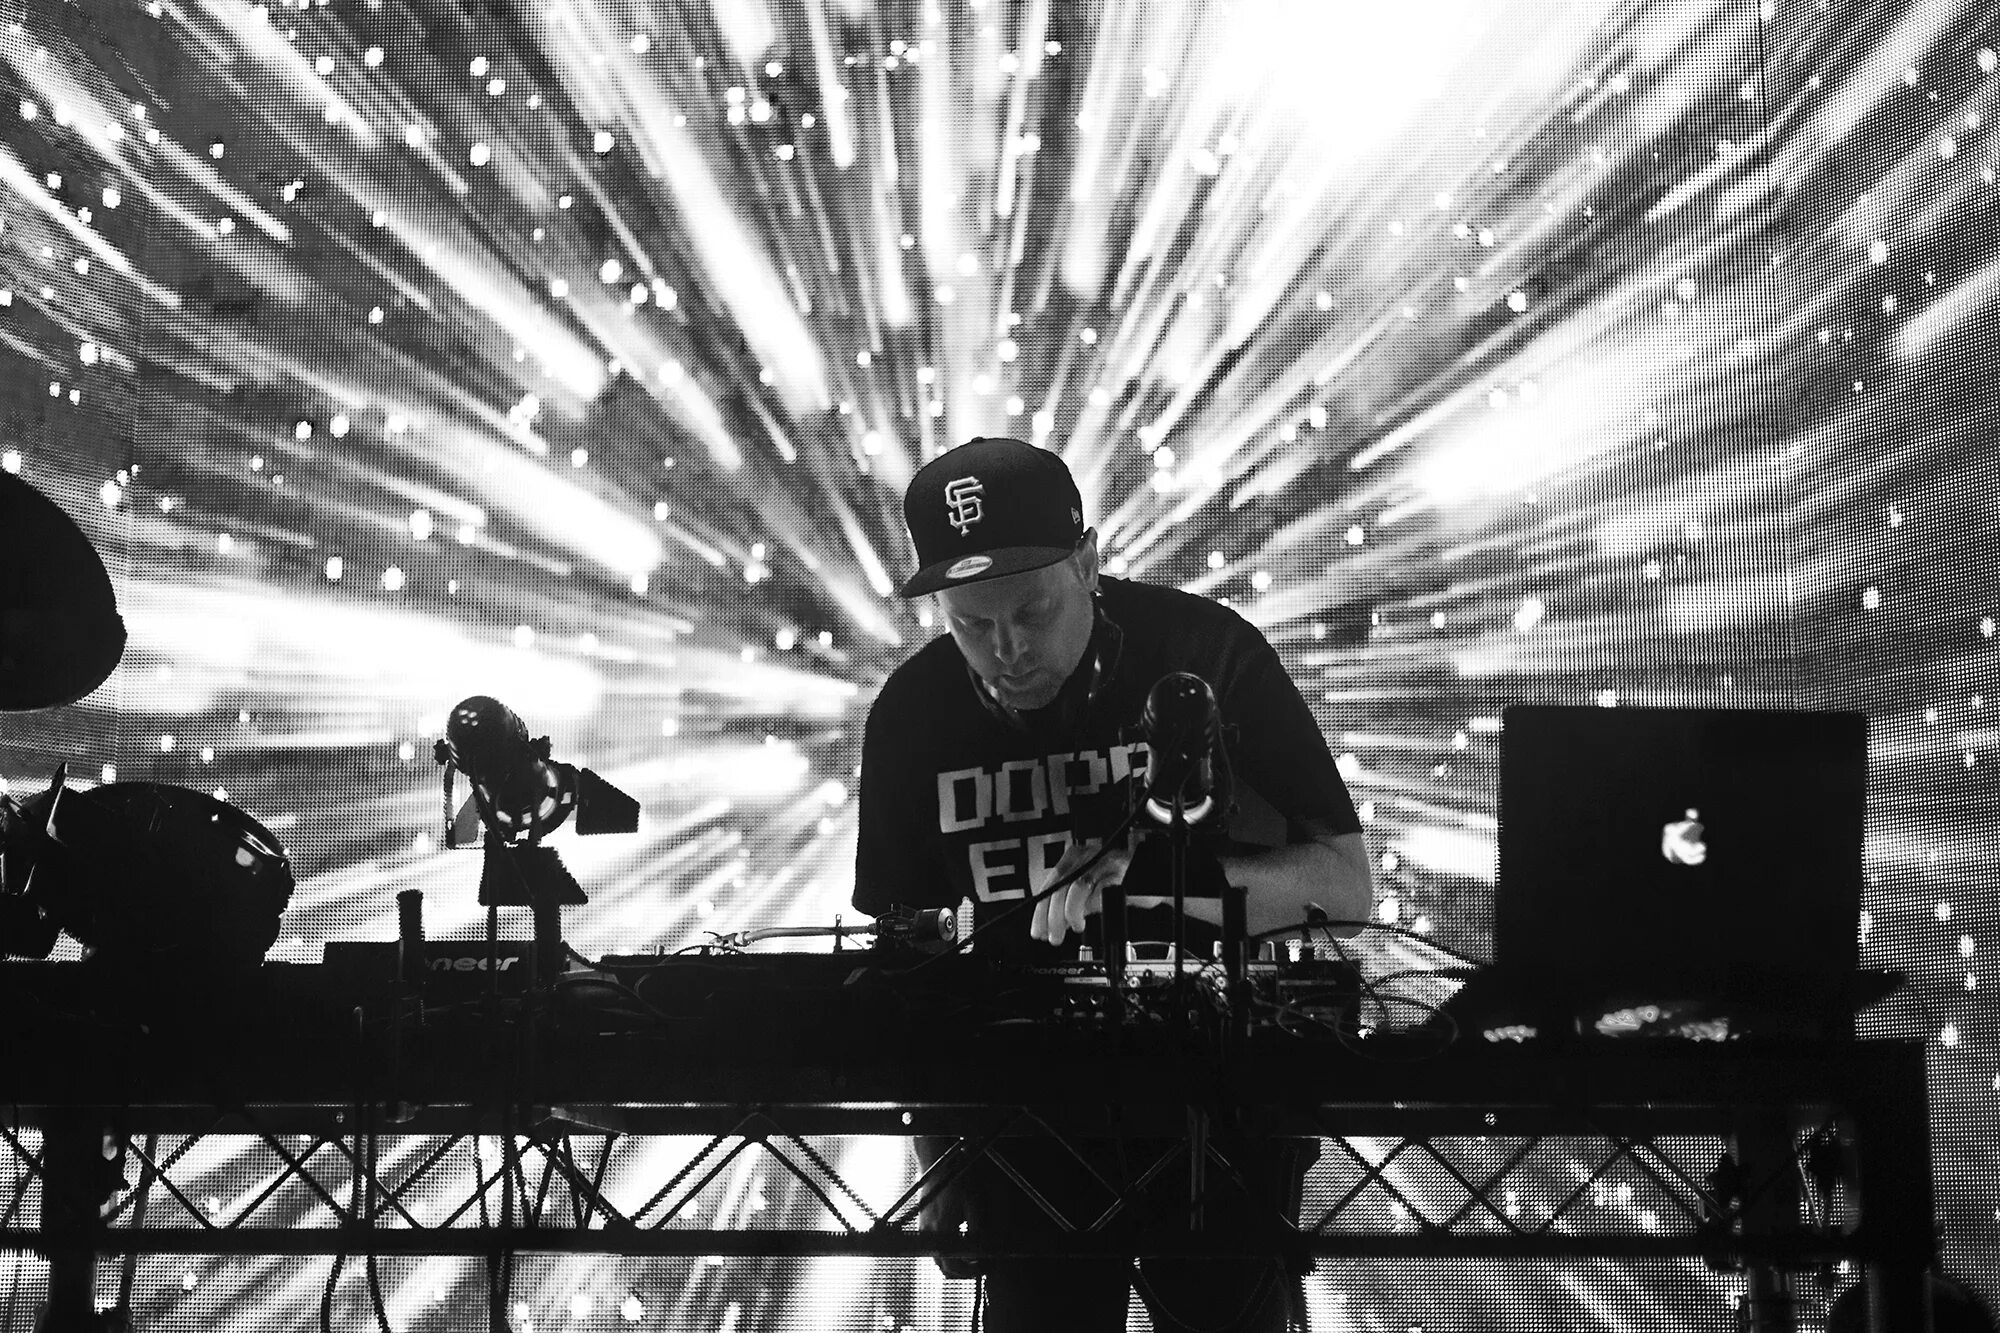 Unkle and DJ Shadow. DJ Shadow "Endtroducing". DJ Shadow фото. Фотография тени диджеев. Slide sonoridade melódica dj shadow zn slowed